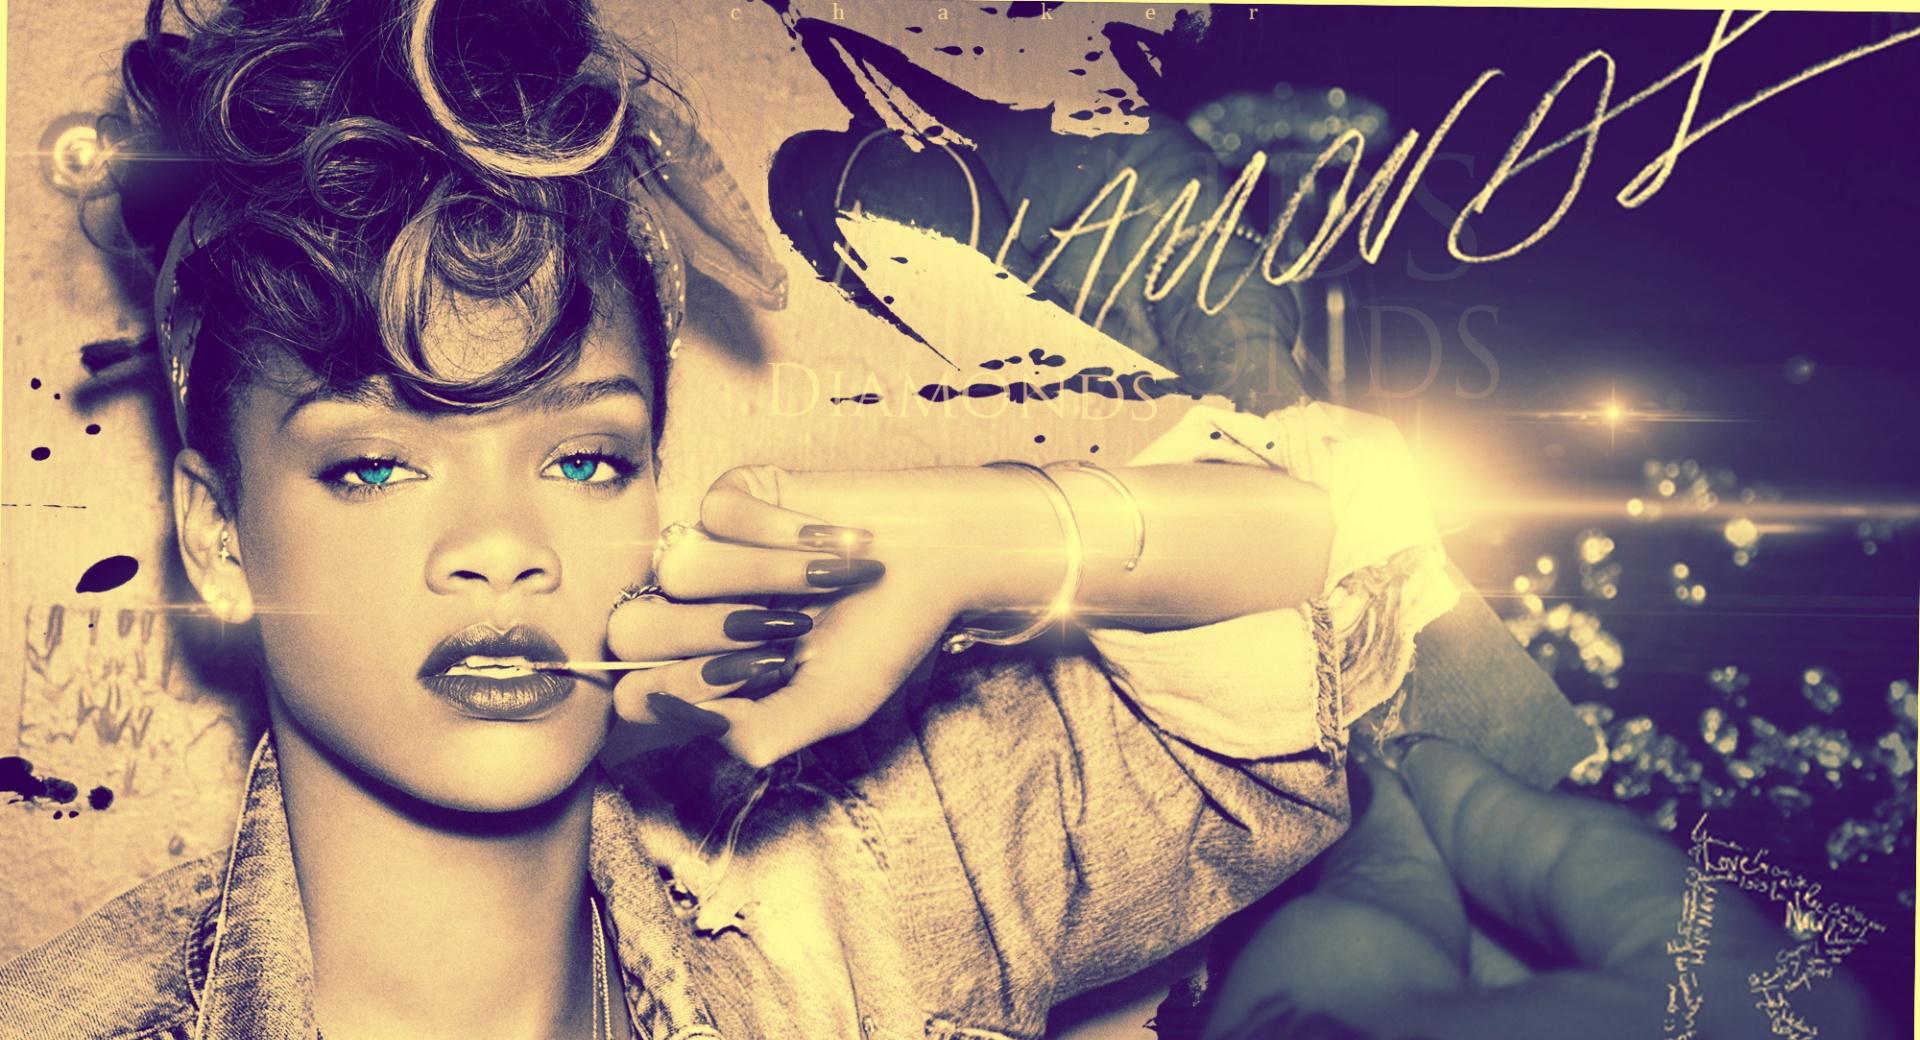 Rihanna-Diamonds wallpapers HD quality